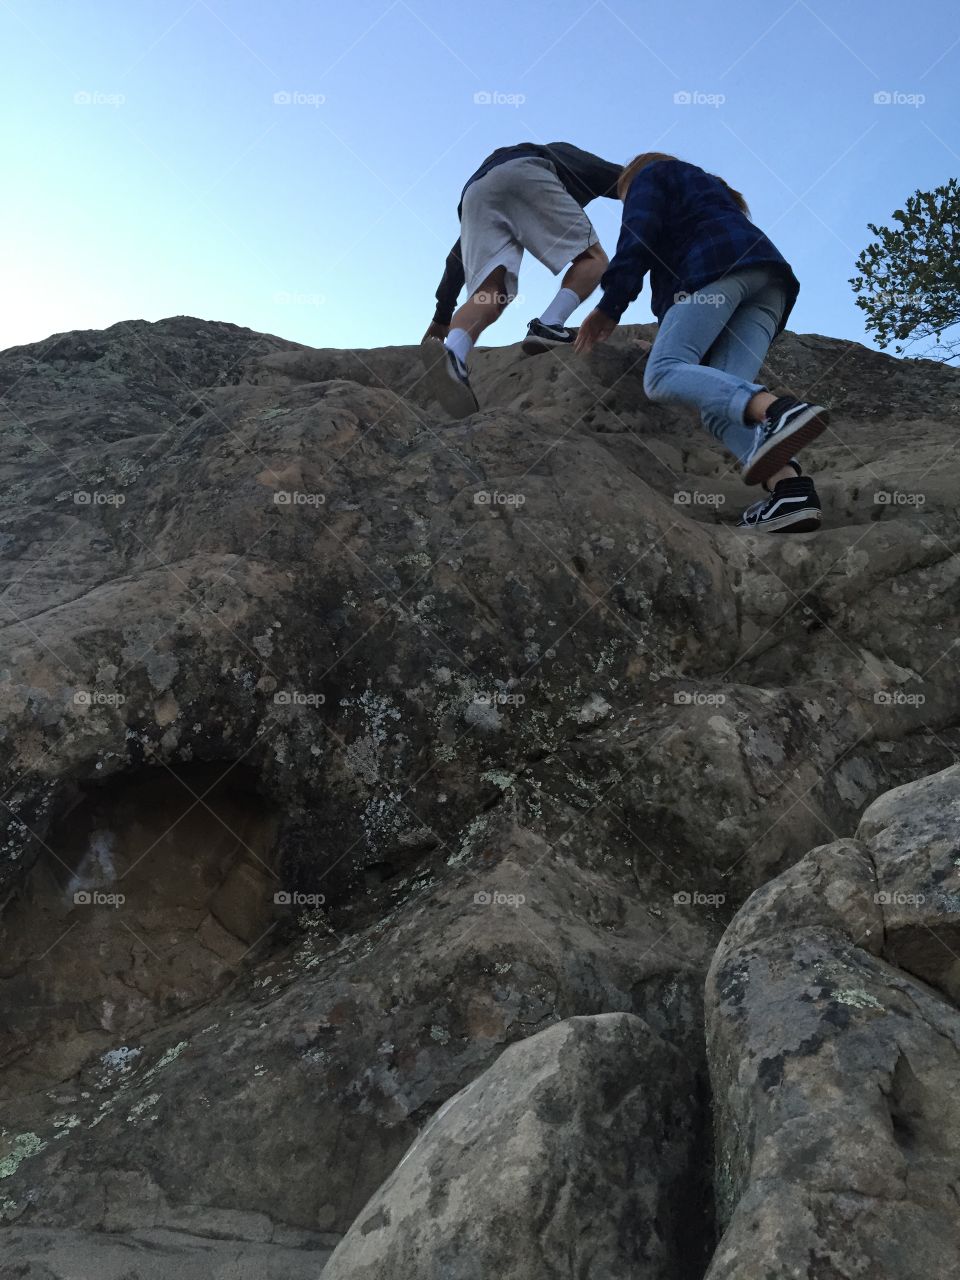 Climbing up the rock